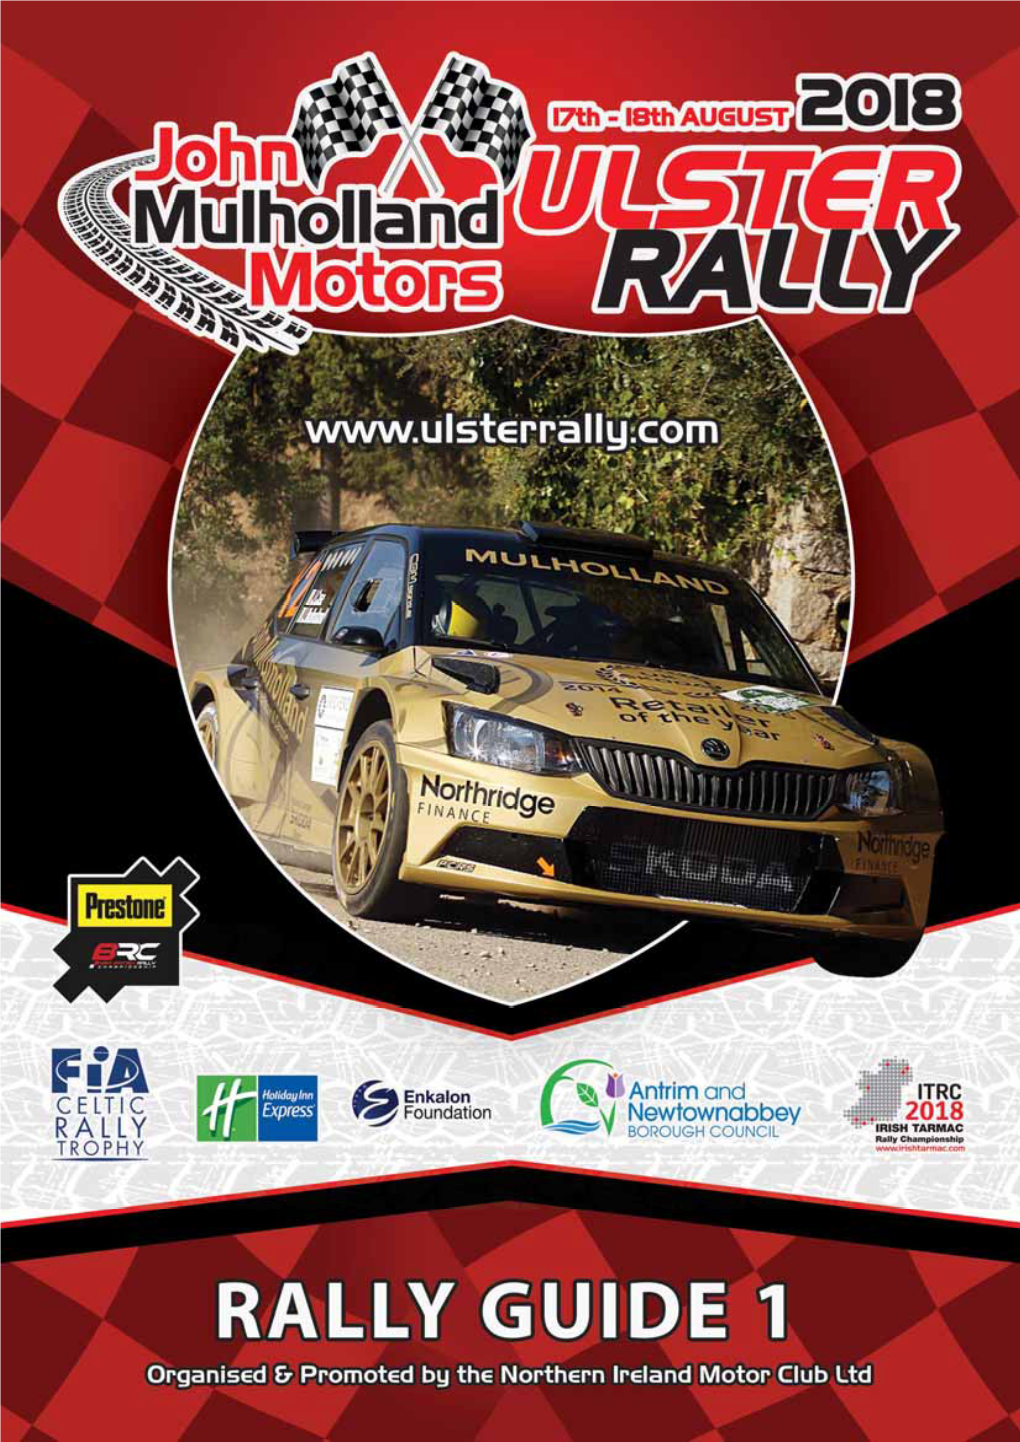 John Mulholland Motors Ulster Rally 2018 – Rally Guide 1